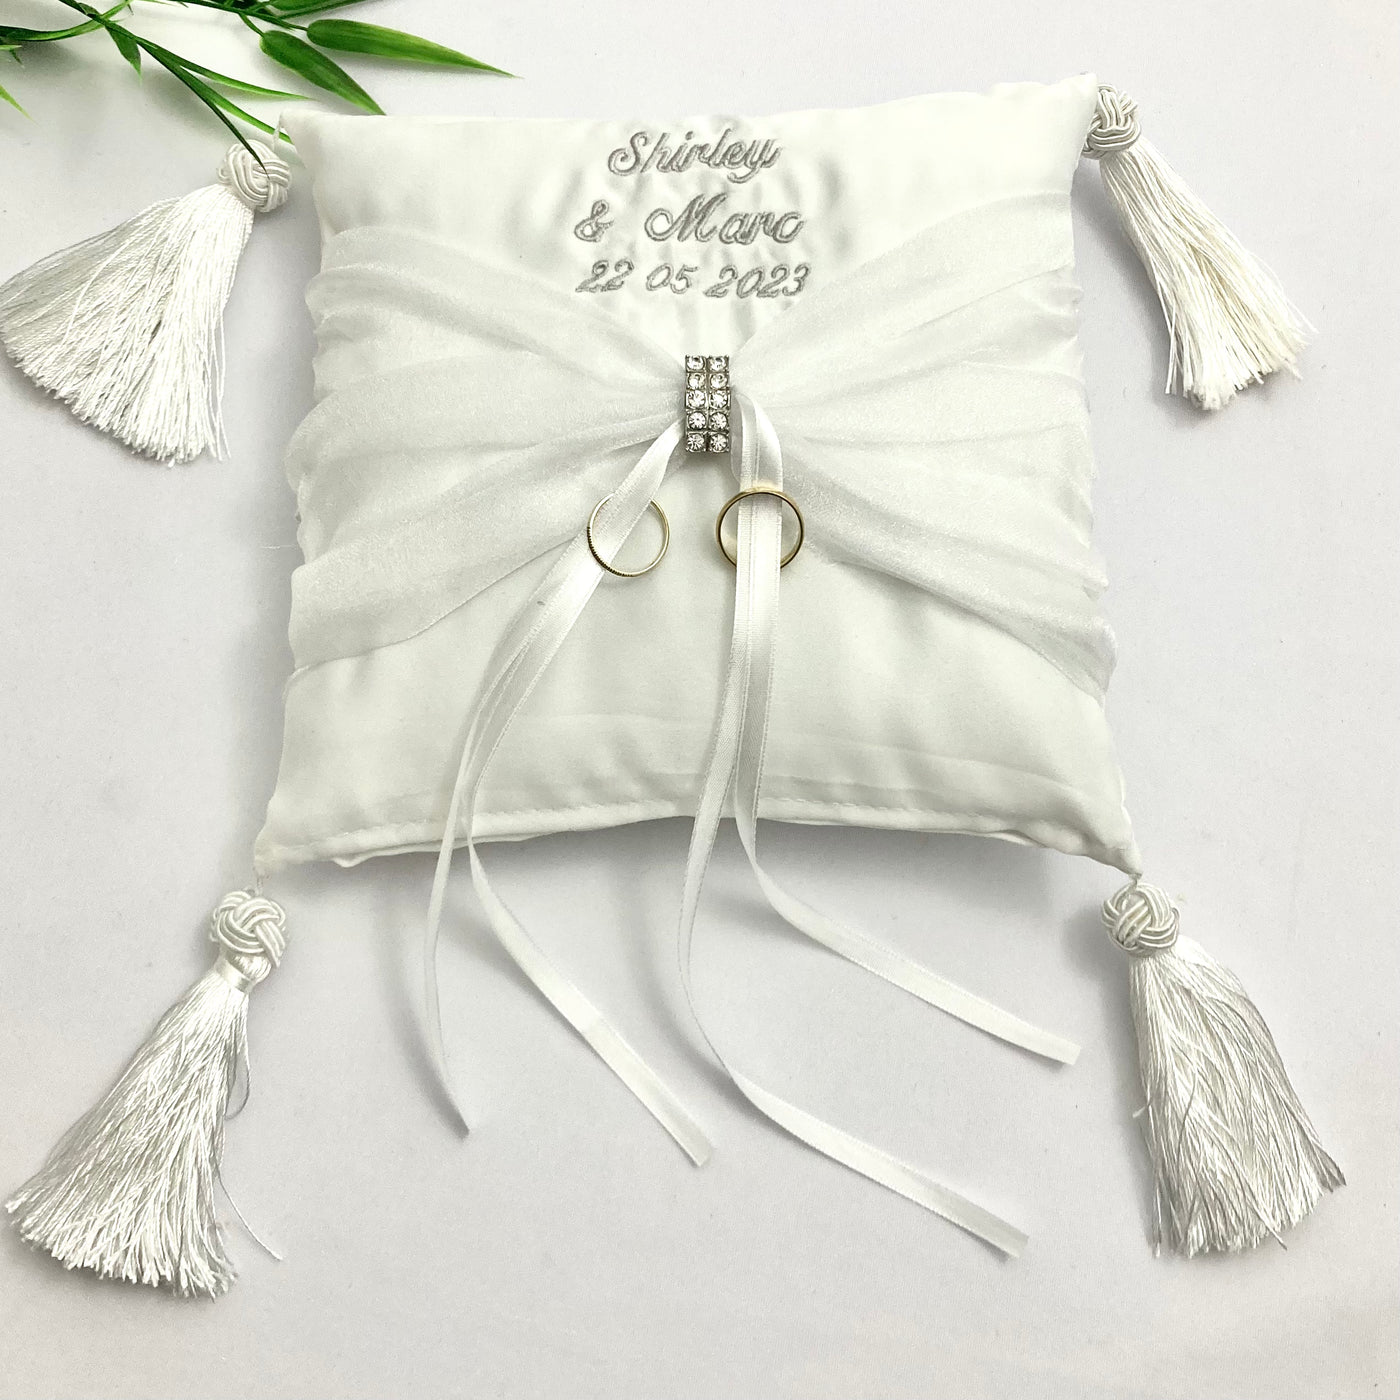 Personalised Bridal Ring Bearer Cushions - Ivory or White